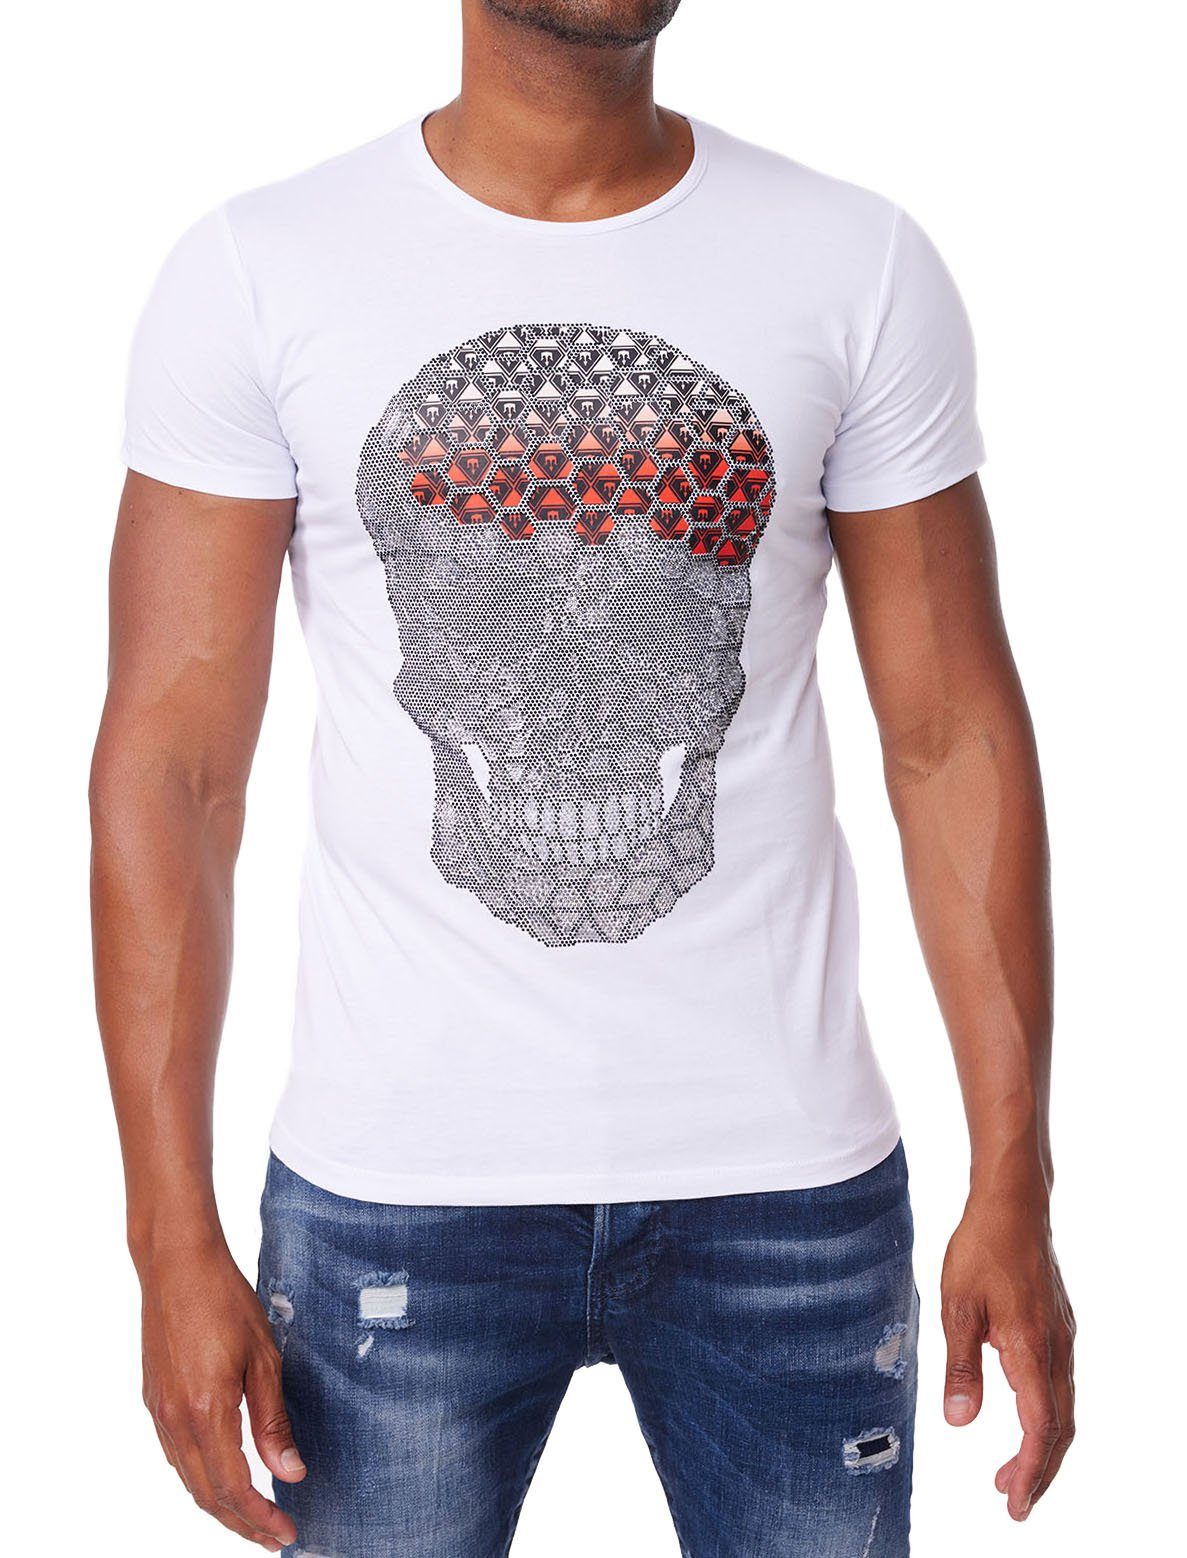 TRUENO T-Shirt Lässiges Herren Kurzarm T-Shirt mit besonderem Totenkopf Motiv | T-Shirts